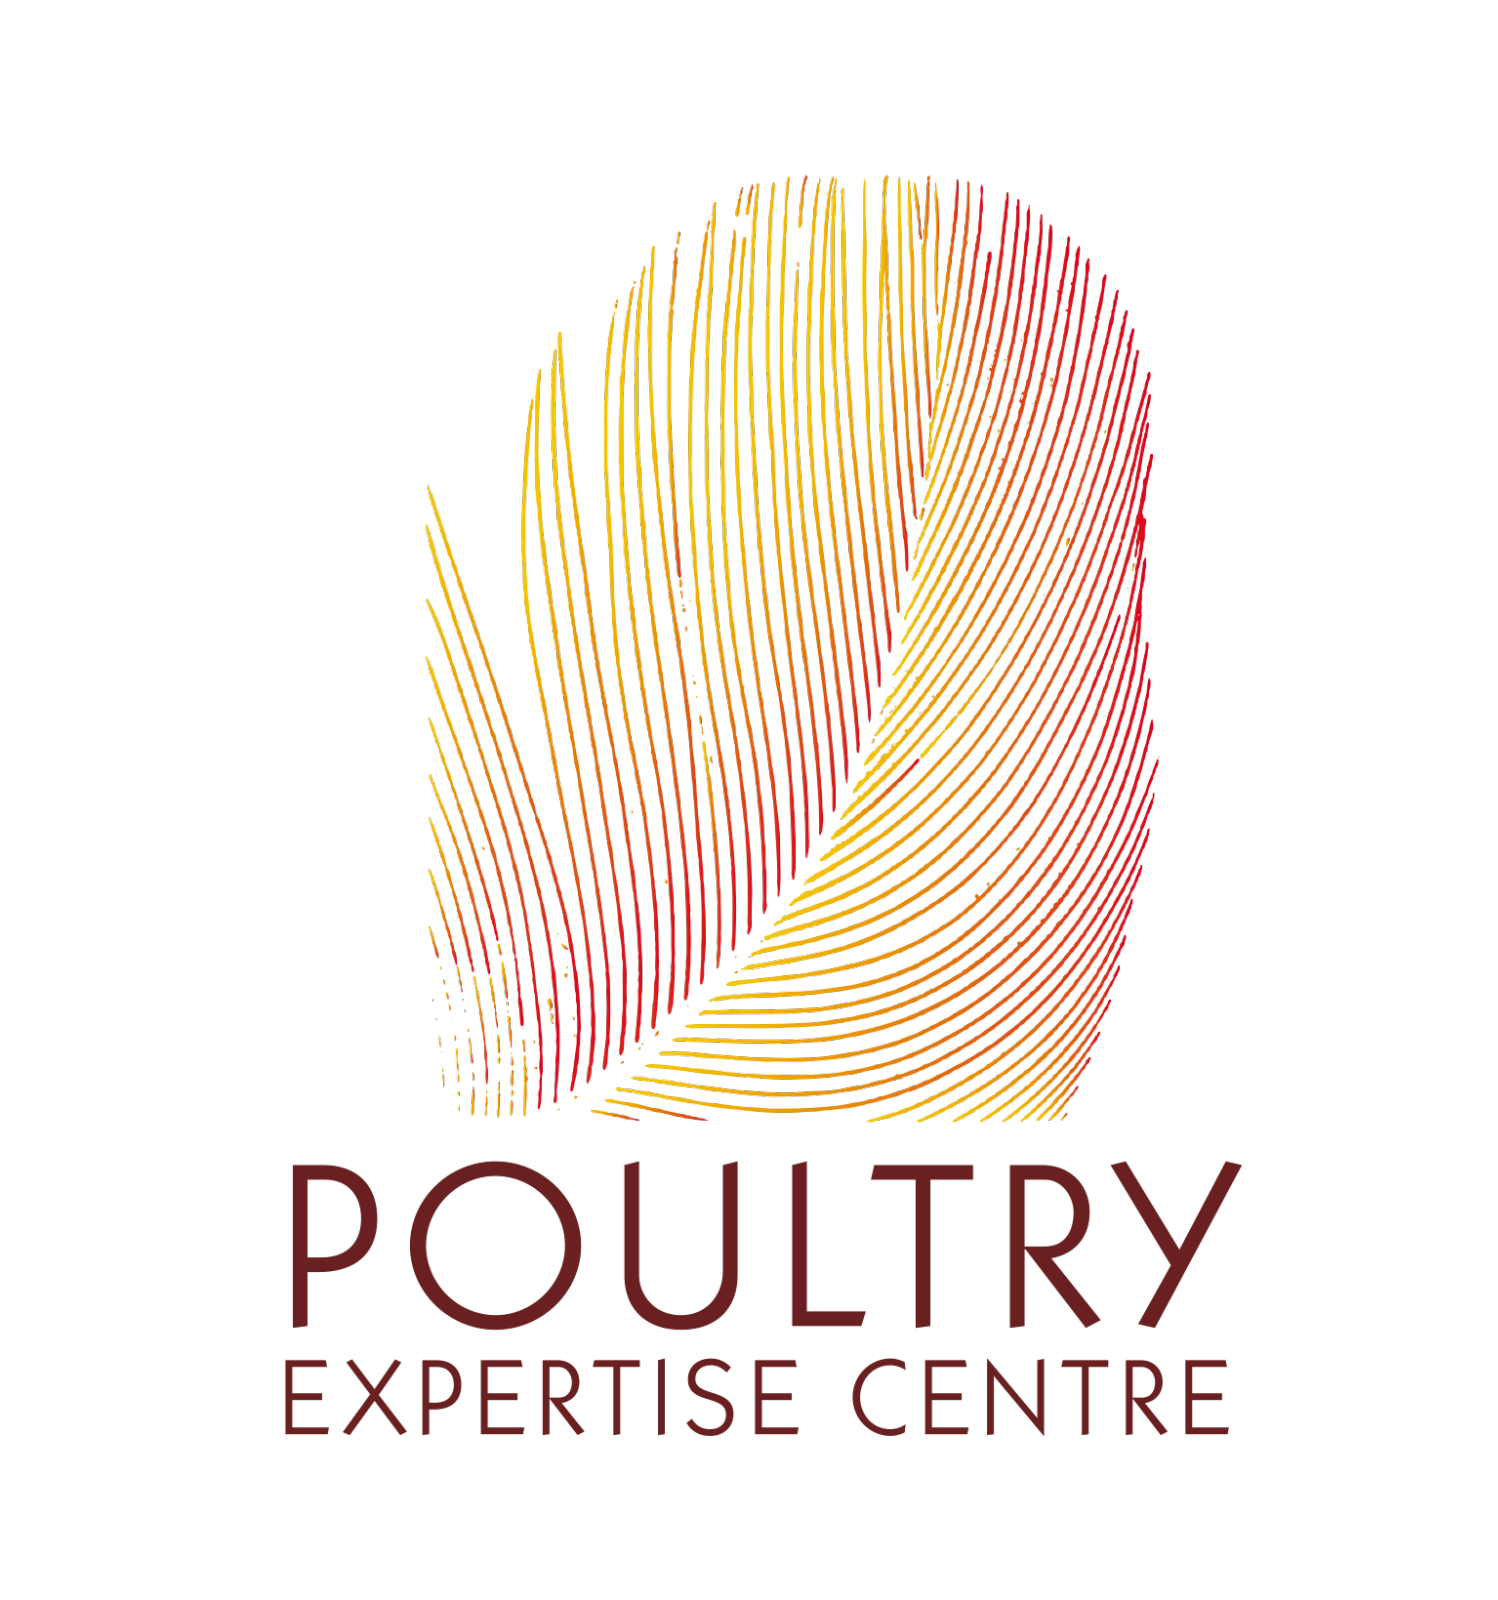 Poultry Expertise centre logo